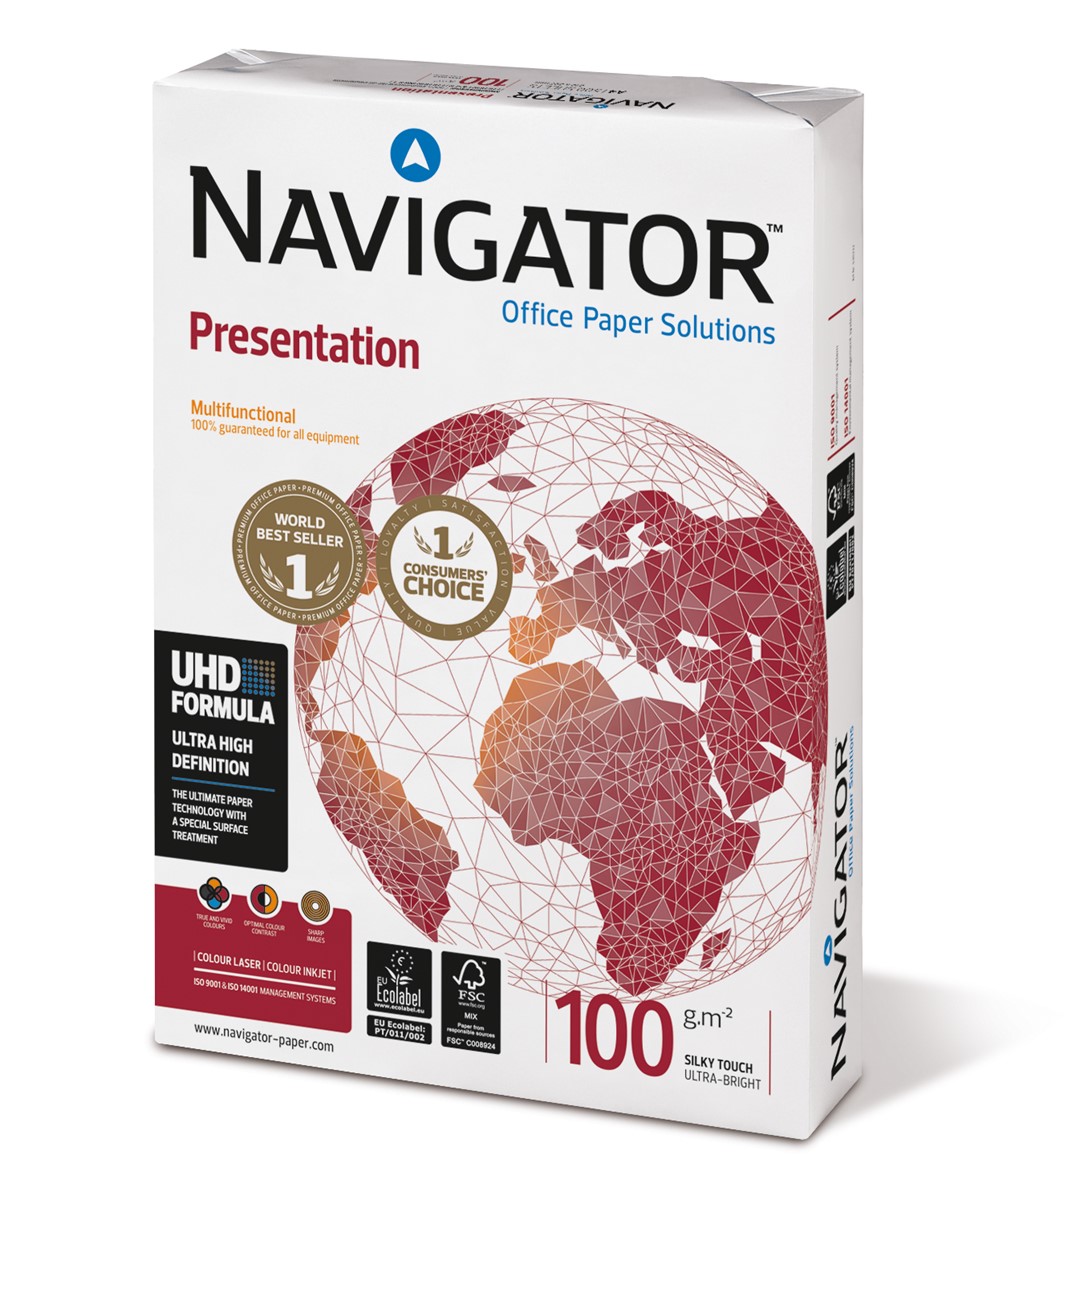 Papier ksero biały A4/100g 500 arkuszy Navigator Presentation